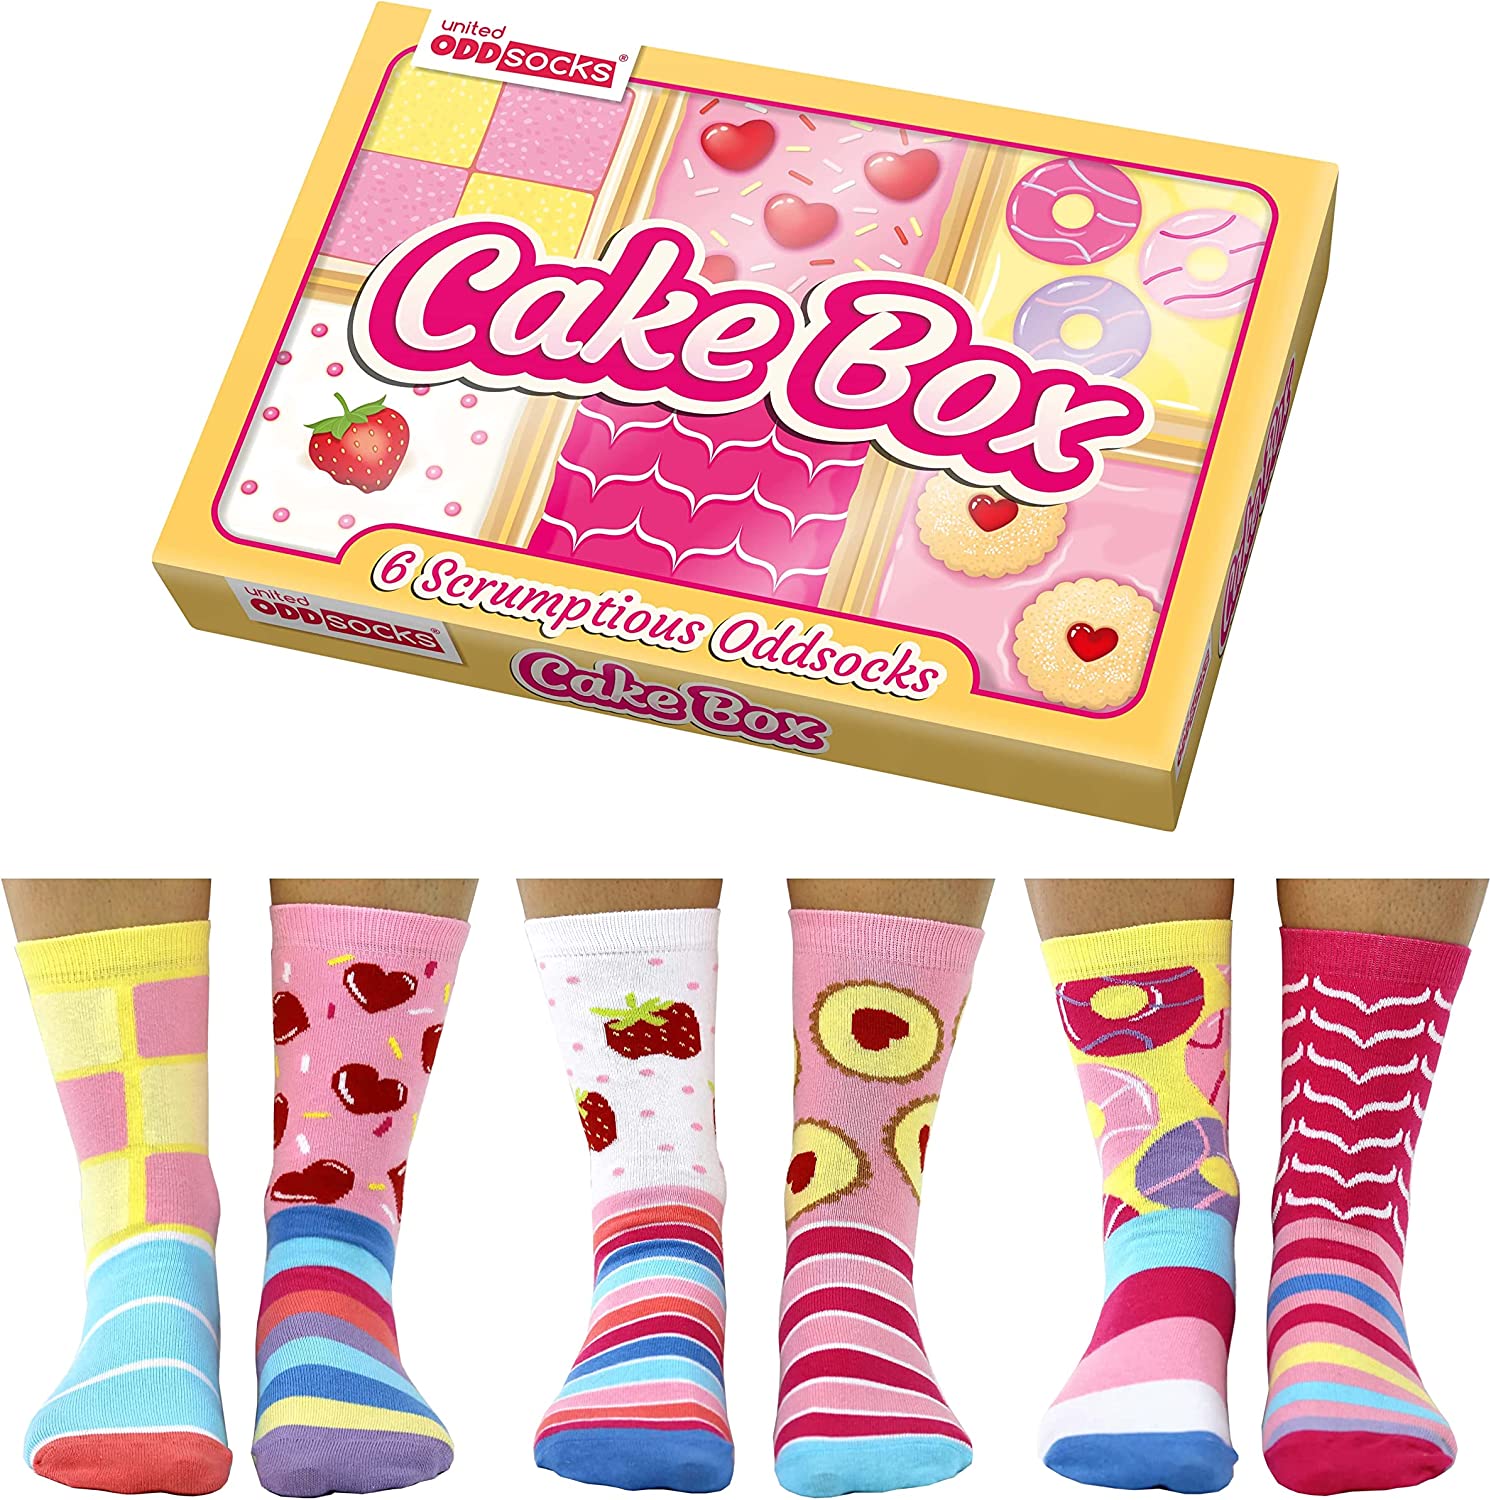 United Oddsocks Cake Box Women's Socks - Size 4-8